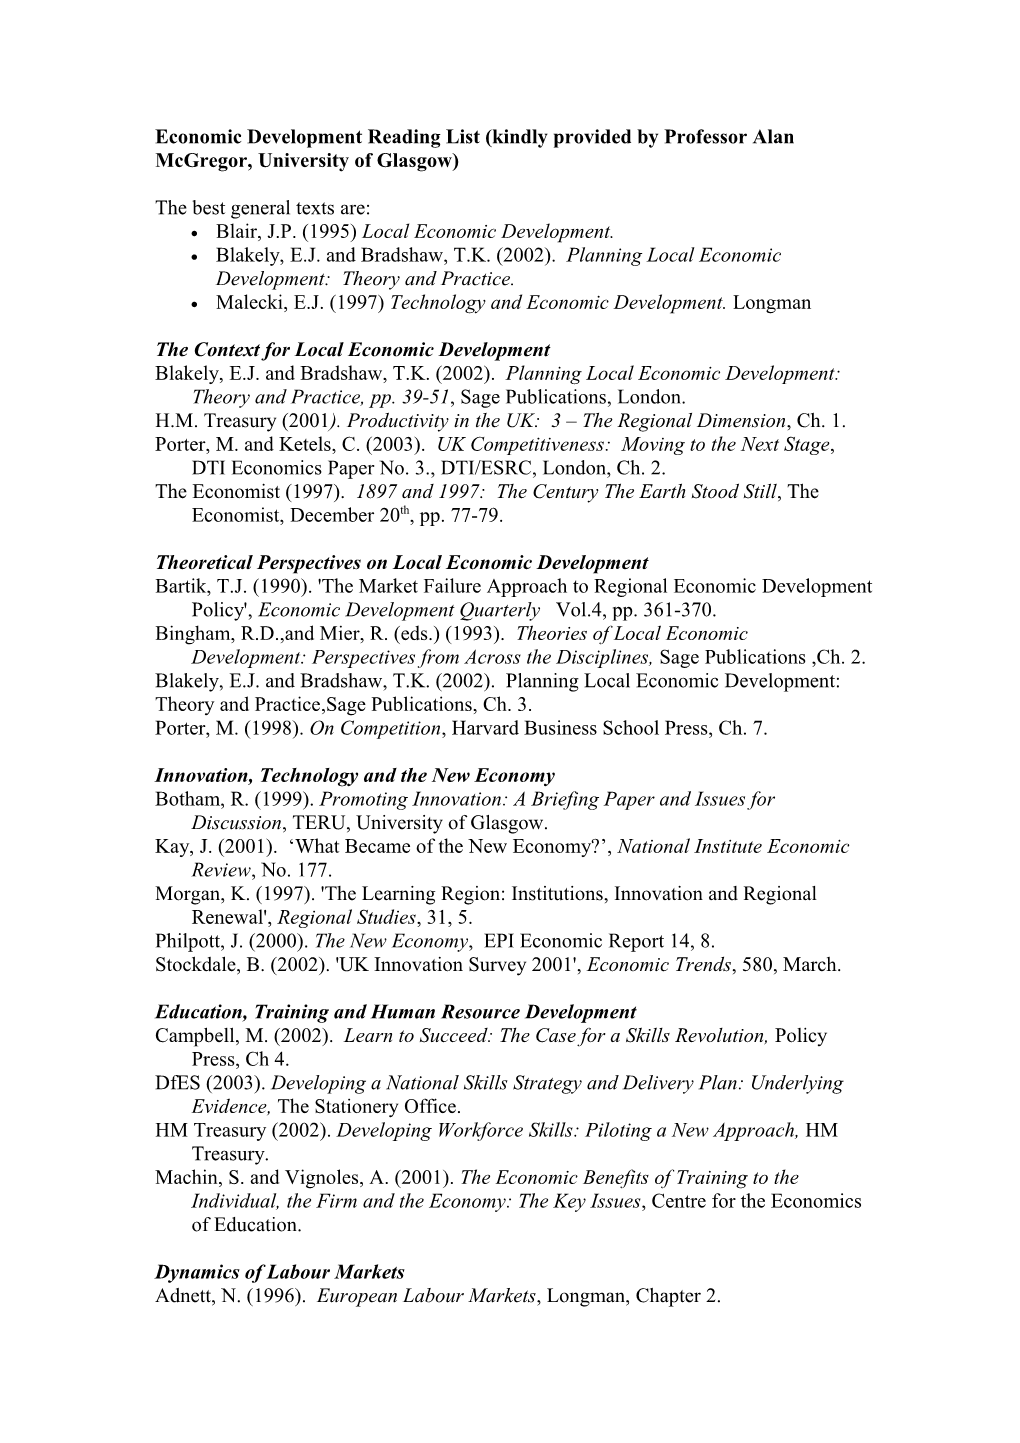 Economic Development Reading List (Kindly Provided by Professor Alan Mcgregor, University